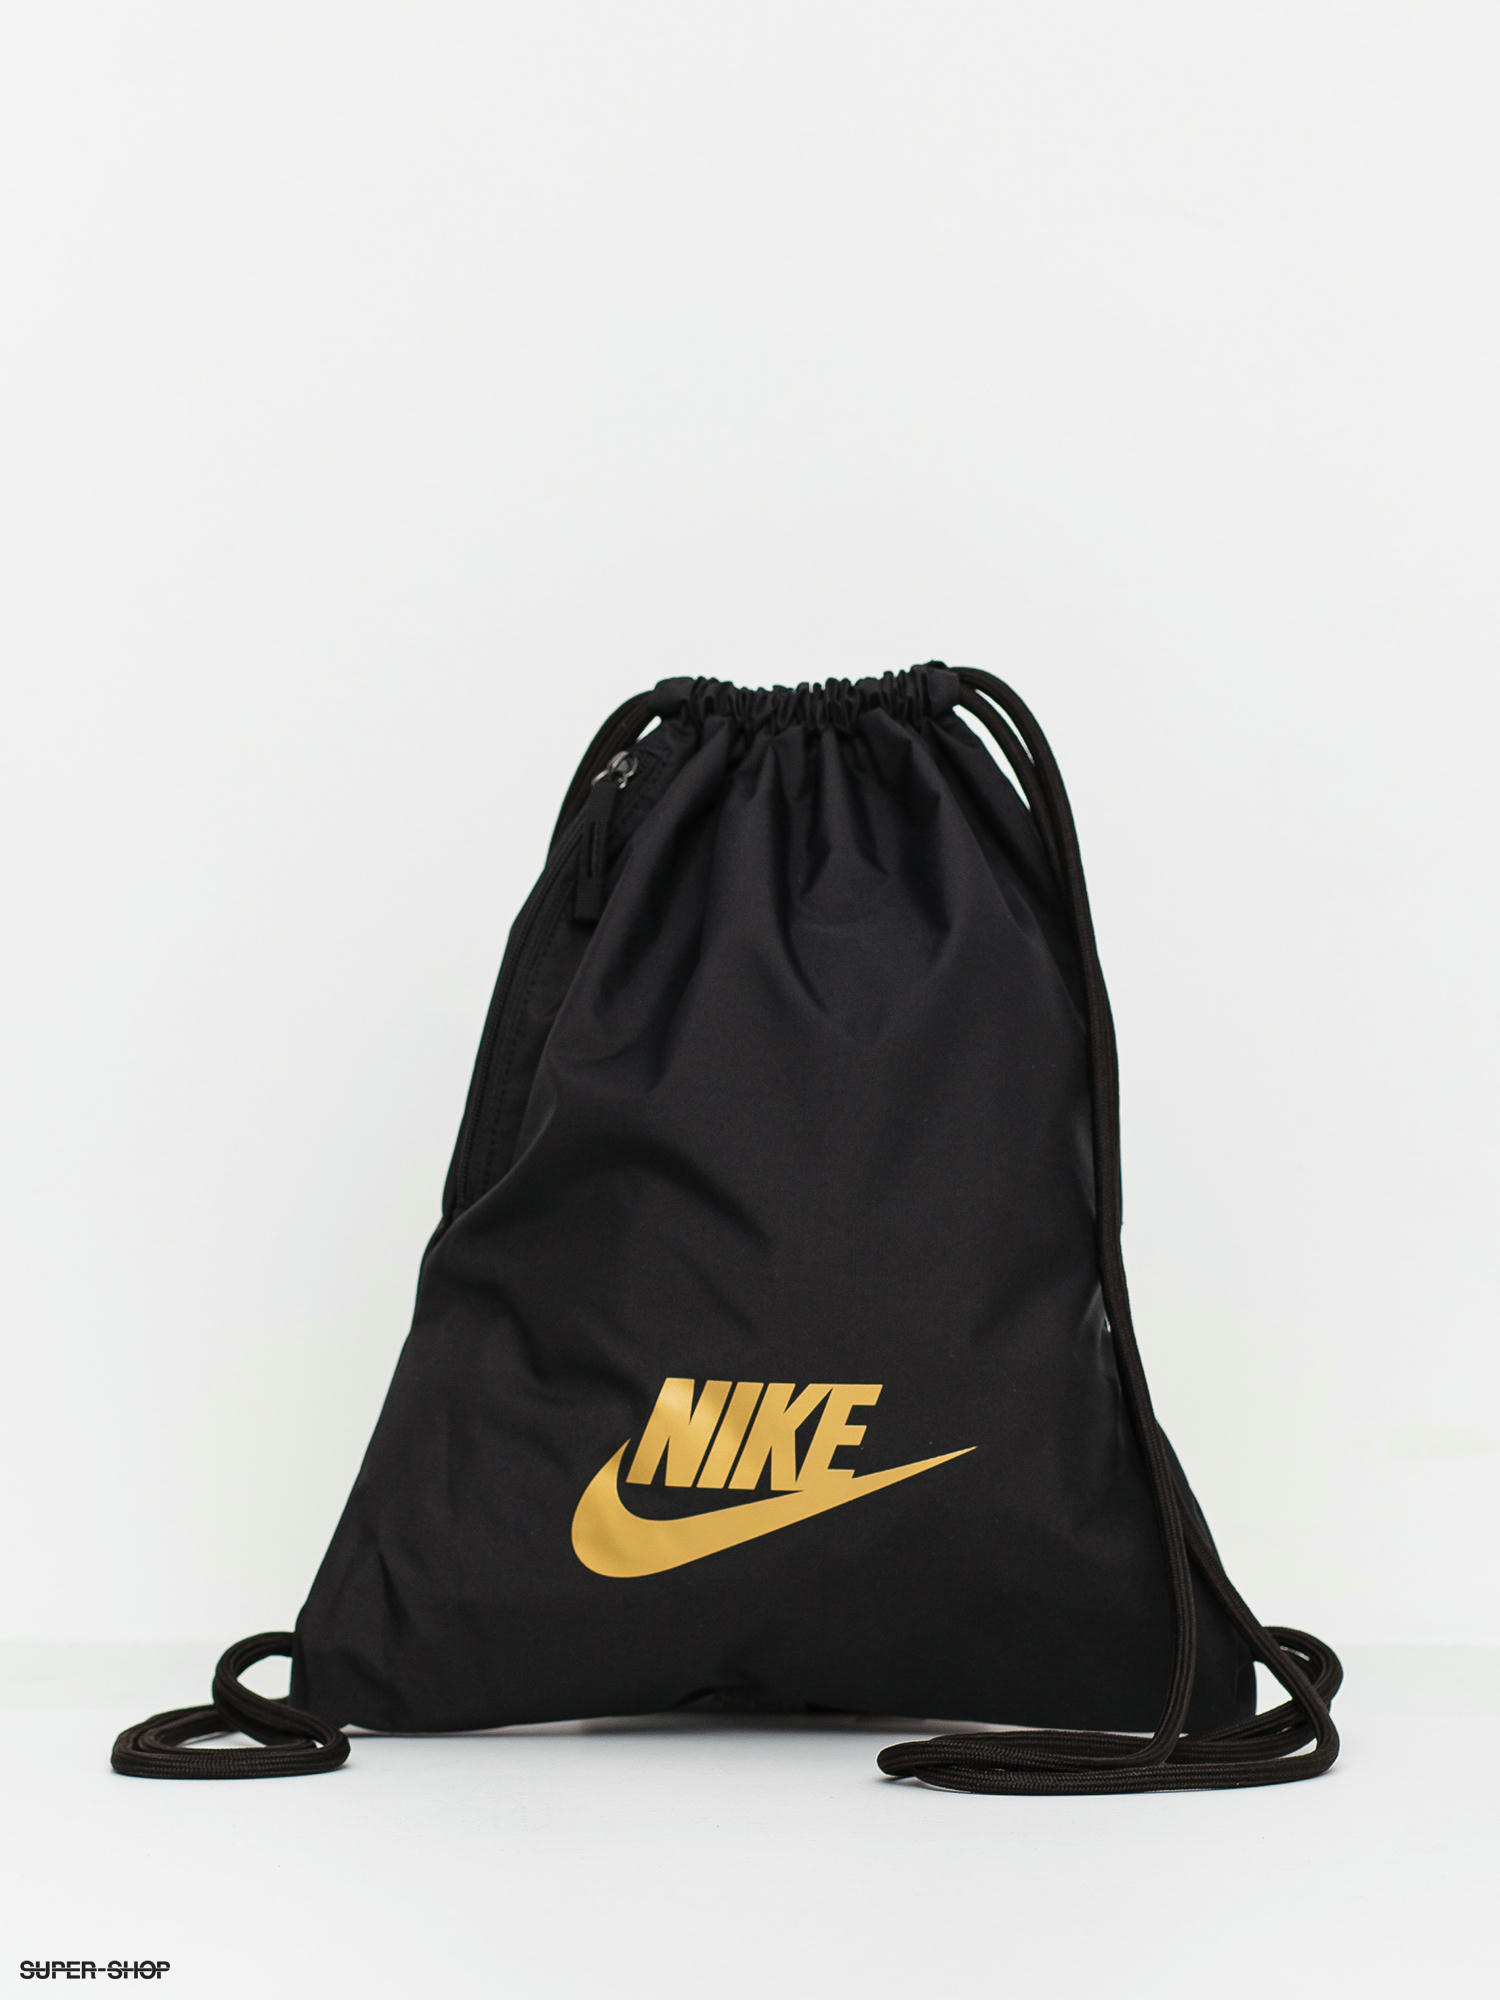 nike backpack gold and black